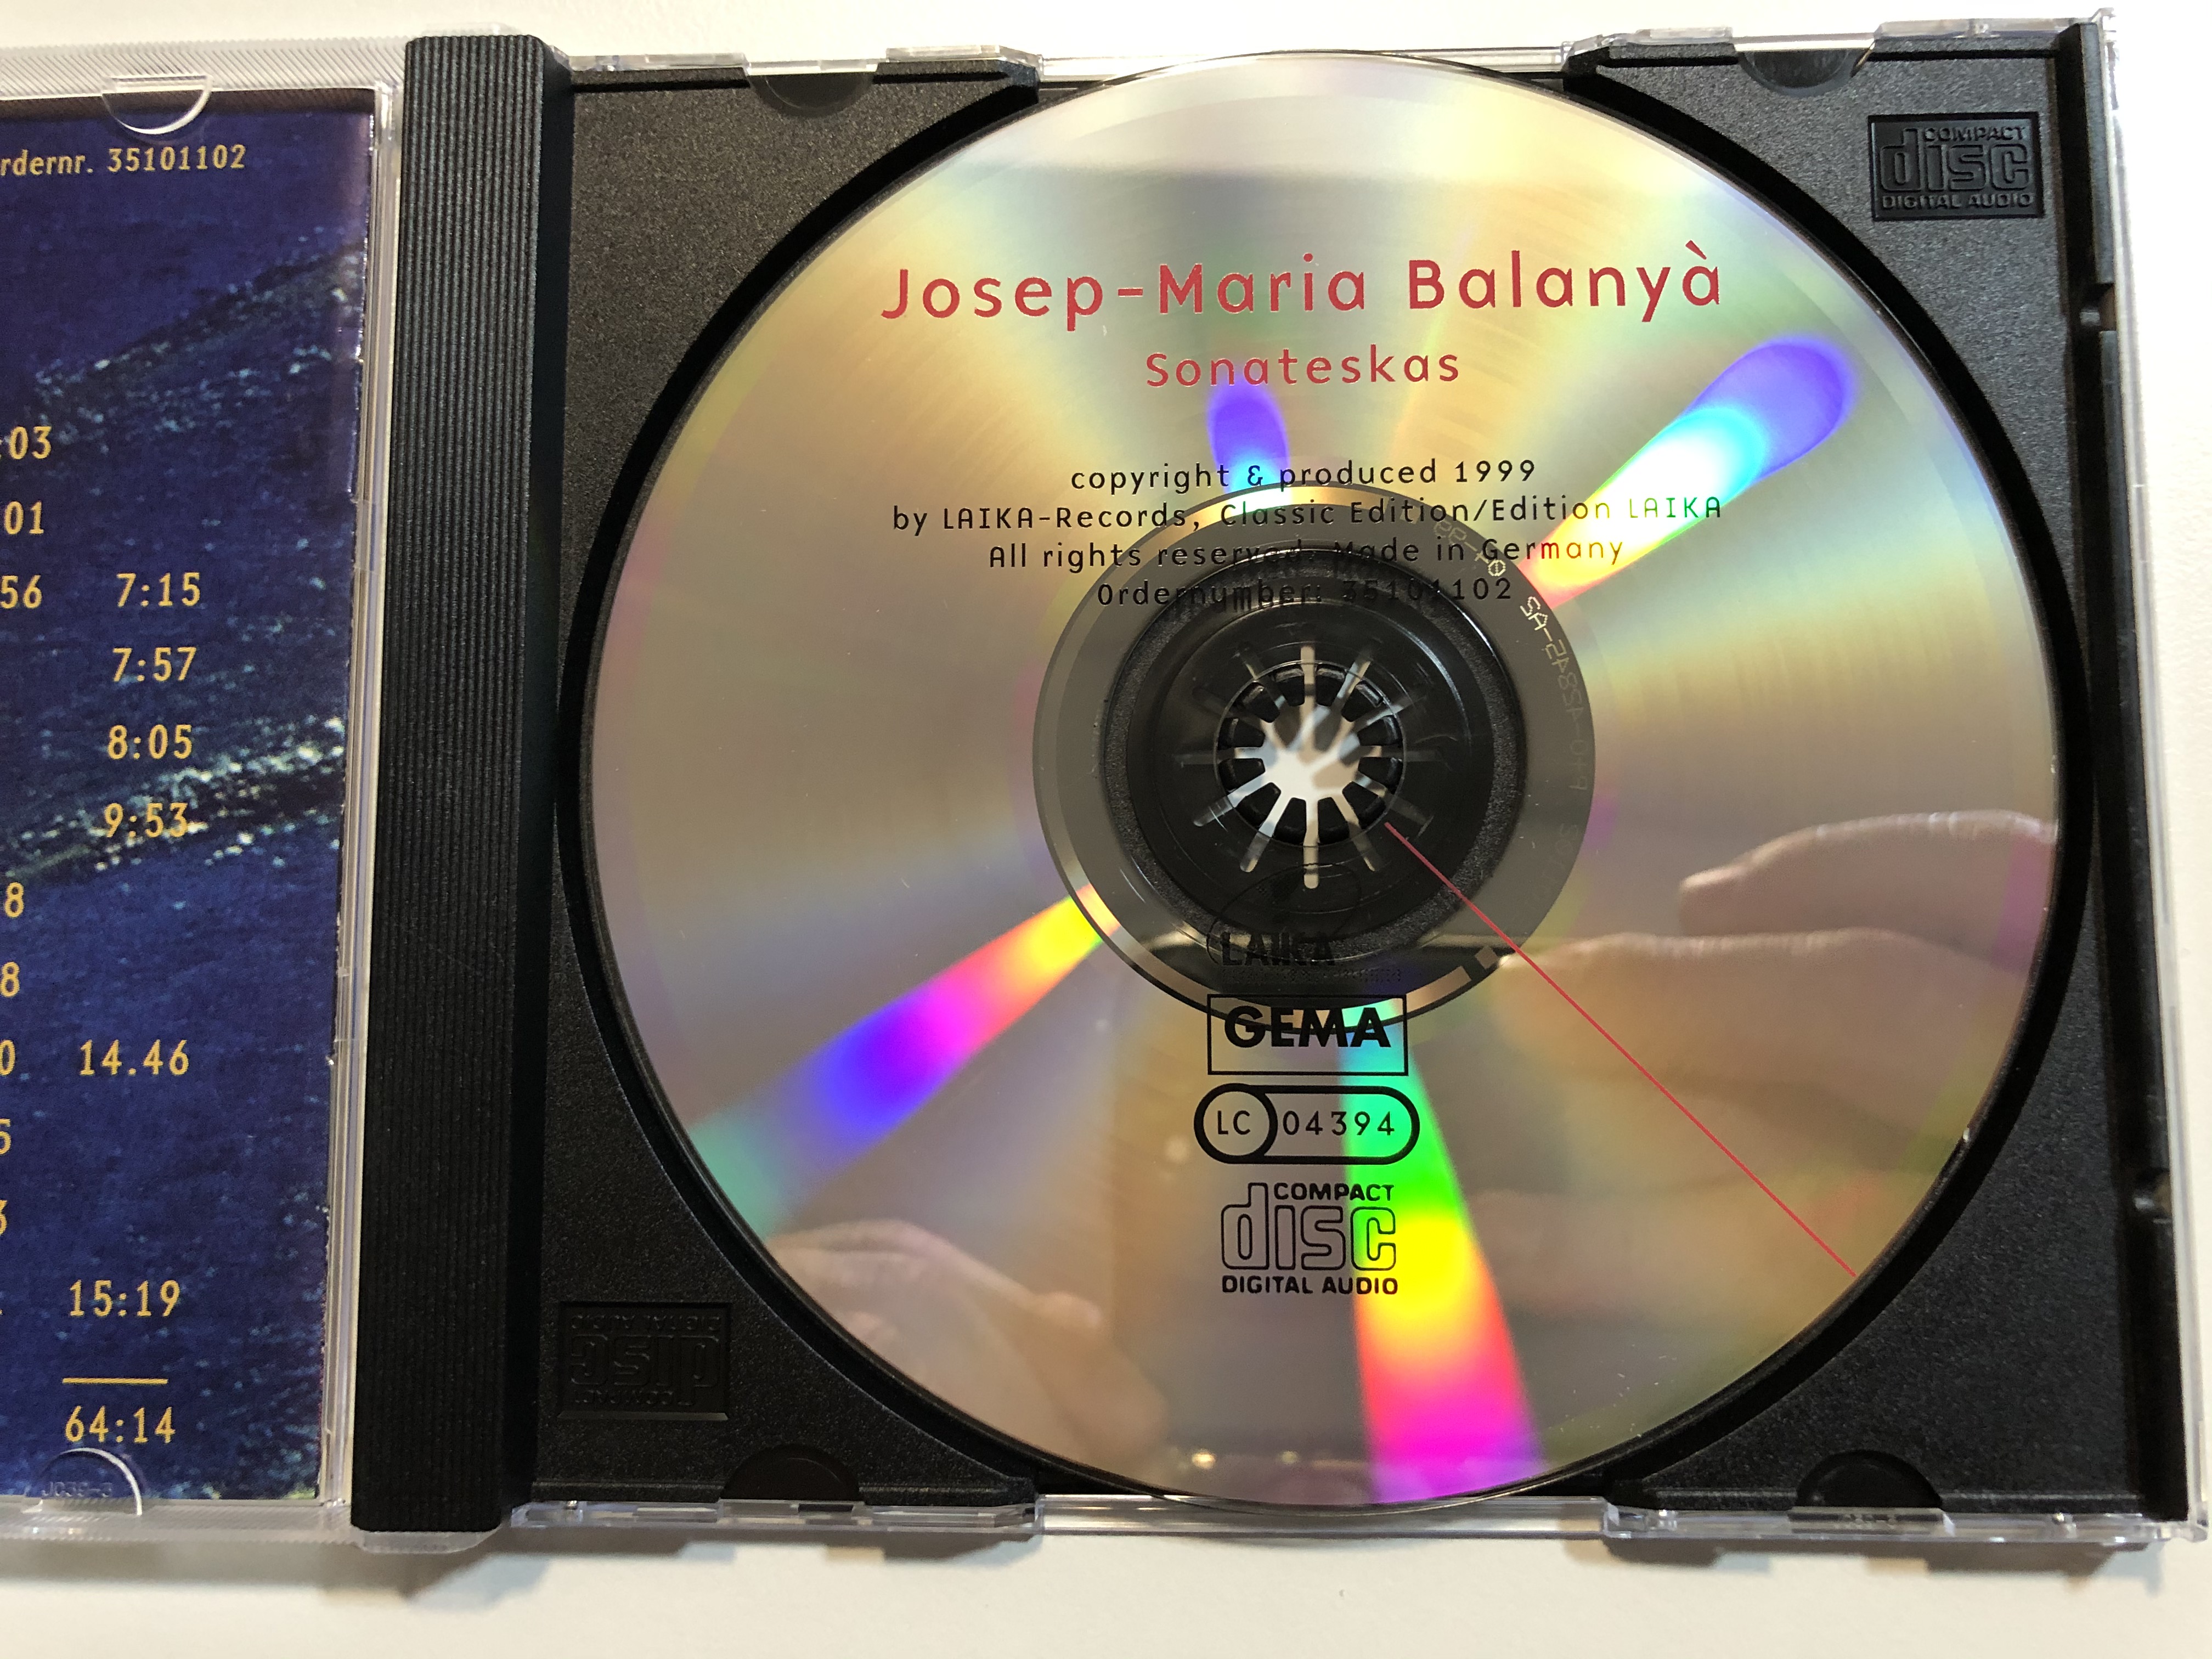 josep-maria-balany-sonateskas-laika-records-audio-cd-1999-35101102-3-.jpg